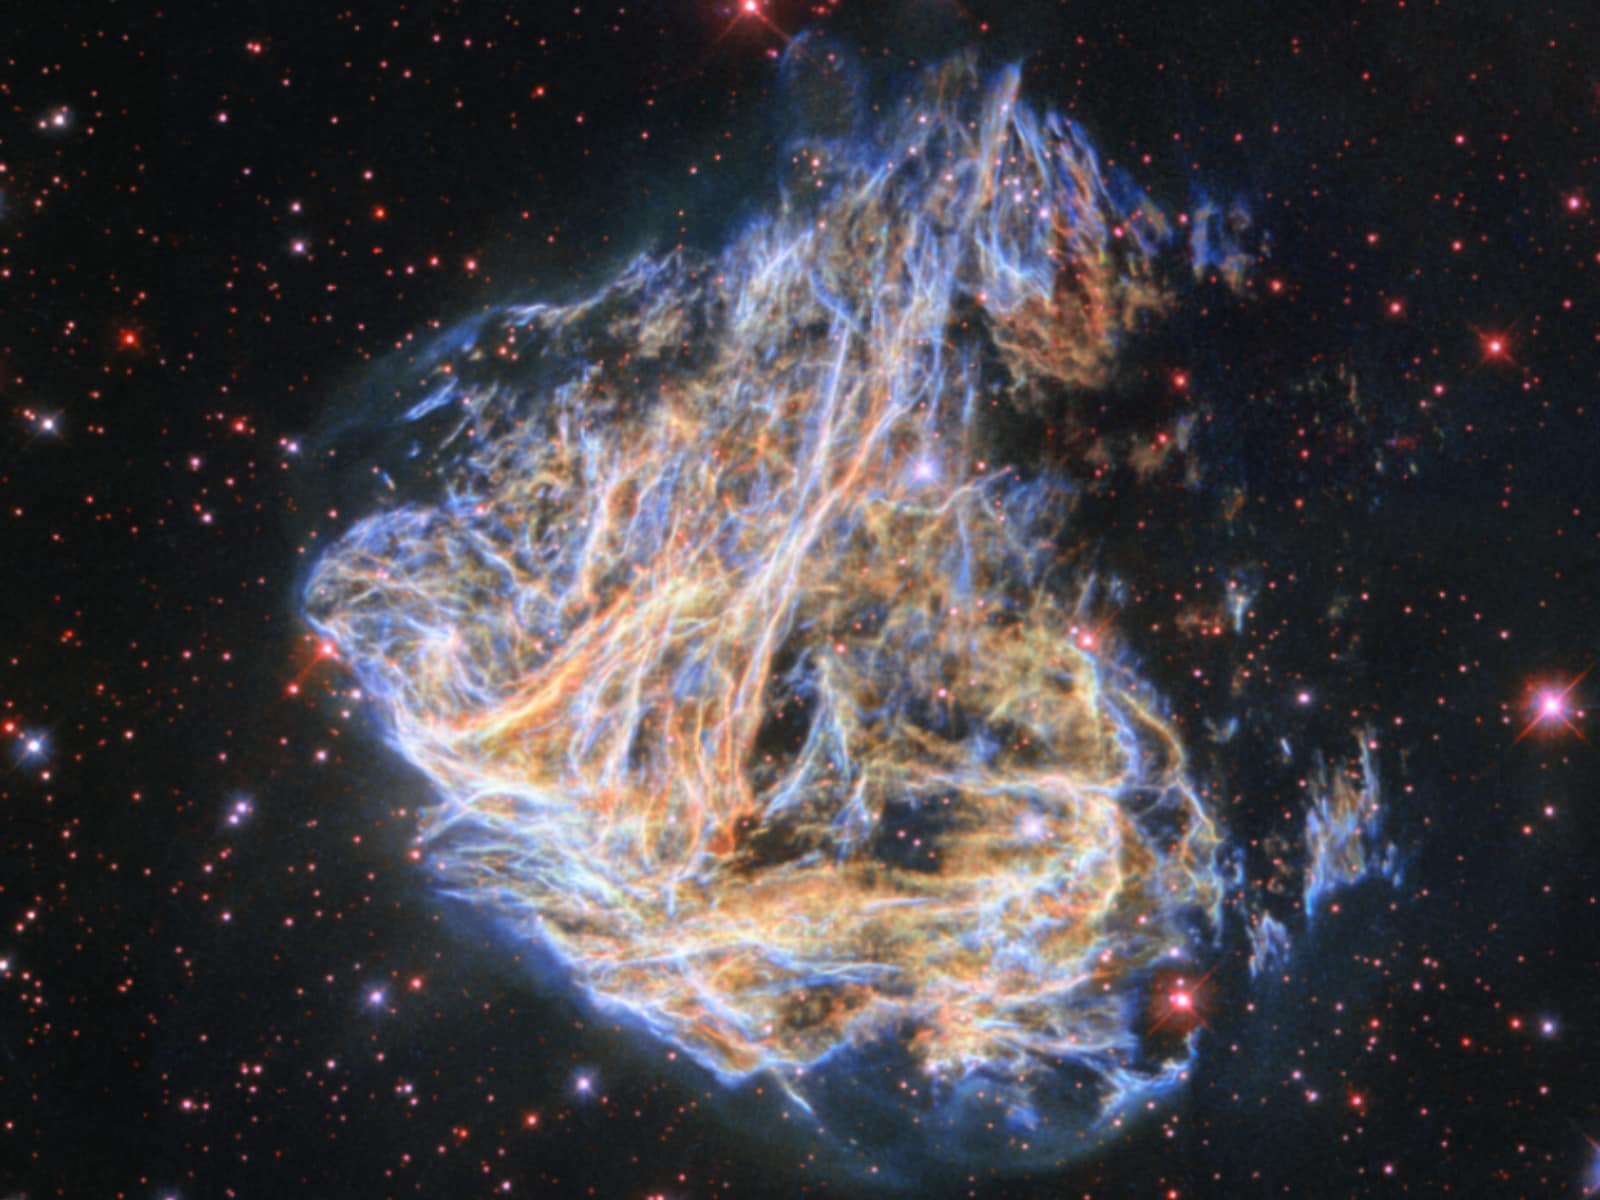 Supernova Star Nasa